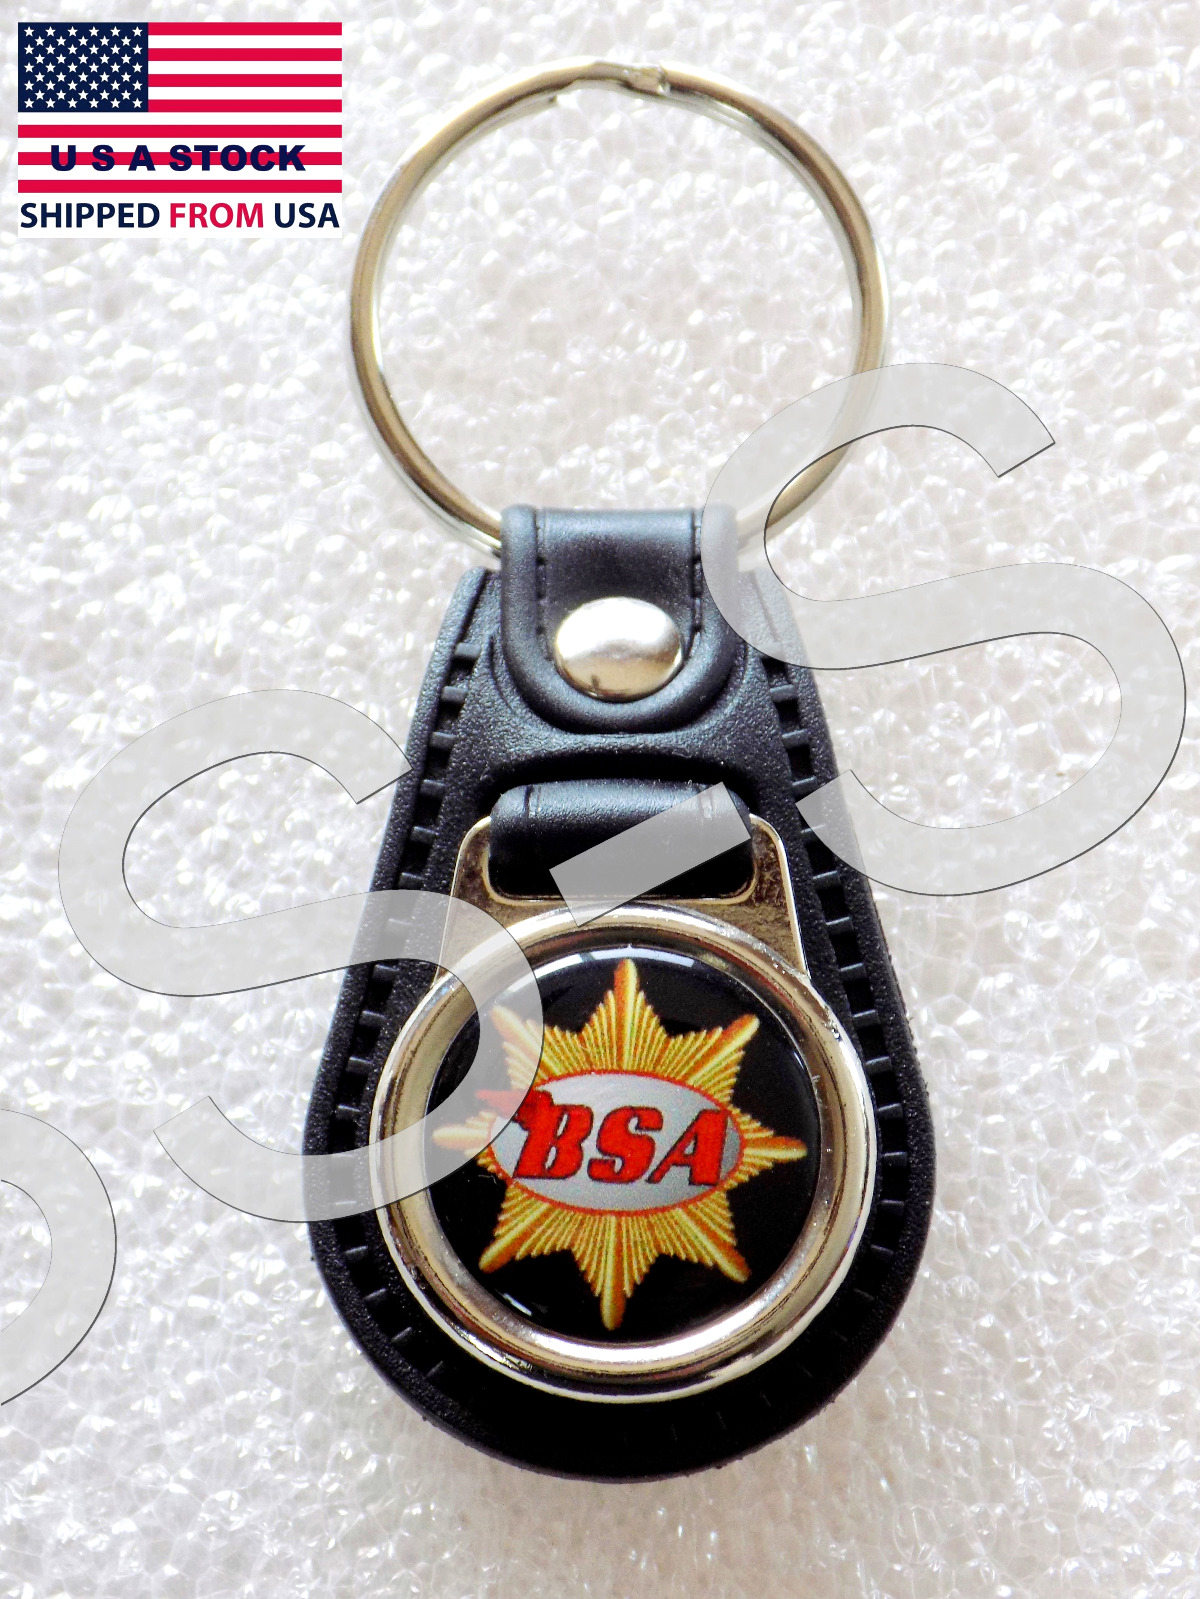 BSA KEY FOB MOTORCYCLES BANTAM GOLDEN FLASH ROCKET STAR PATCH PIN RING PLUNGER